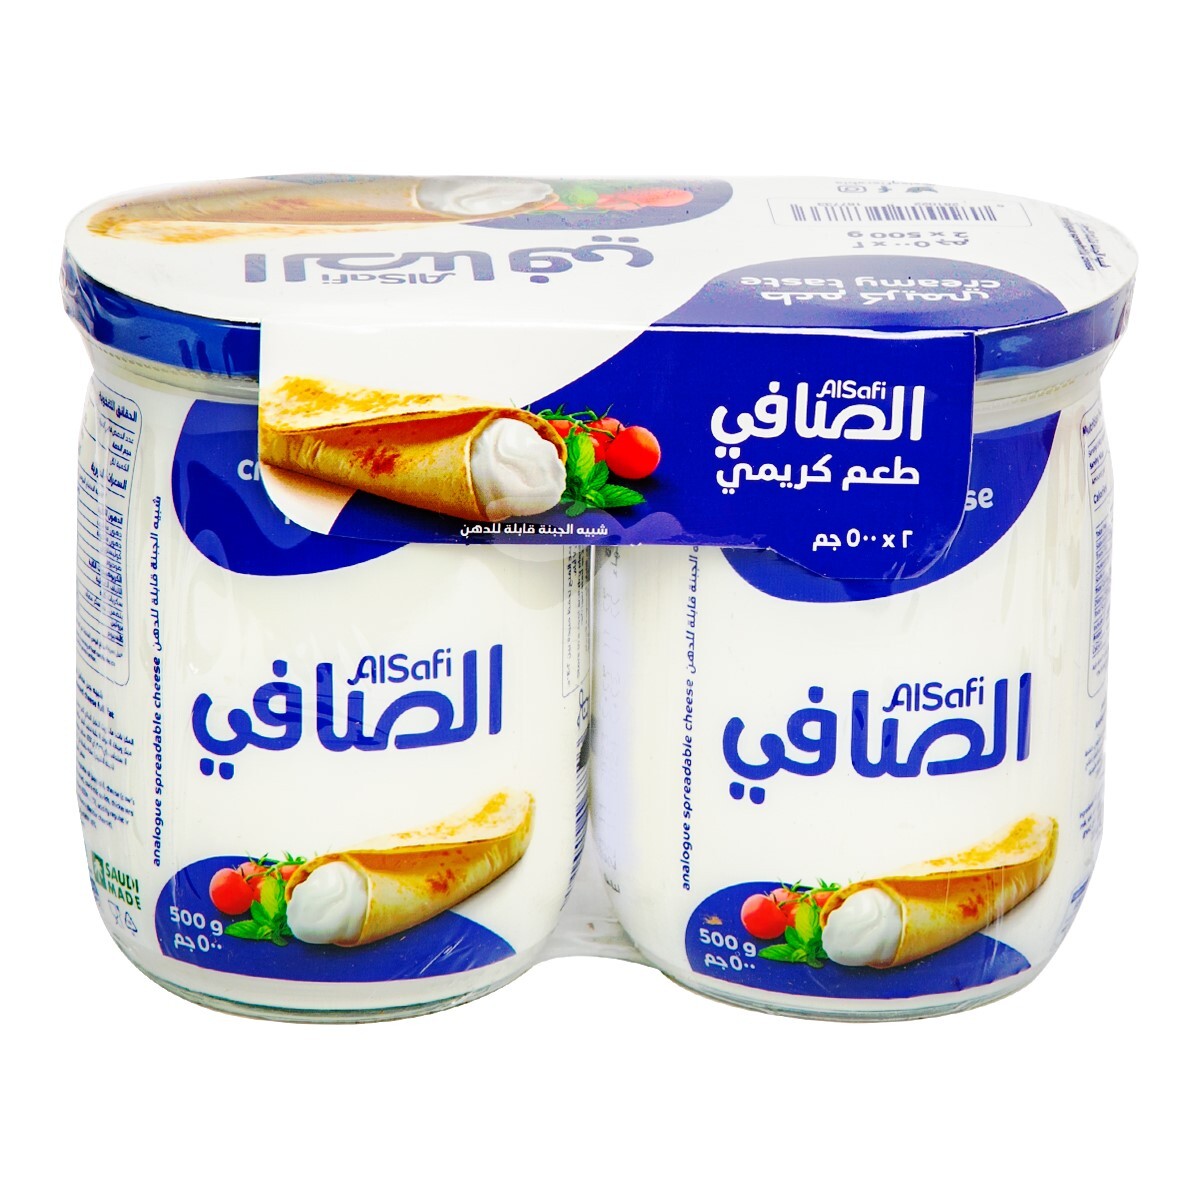 Al Safi Full Fat Cream Cheese Value Pack 2 x 500 g